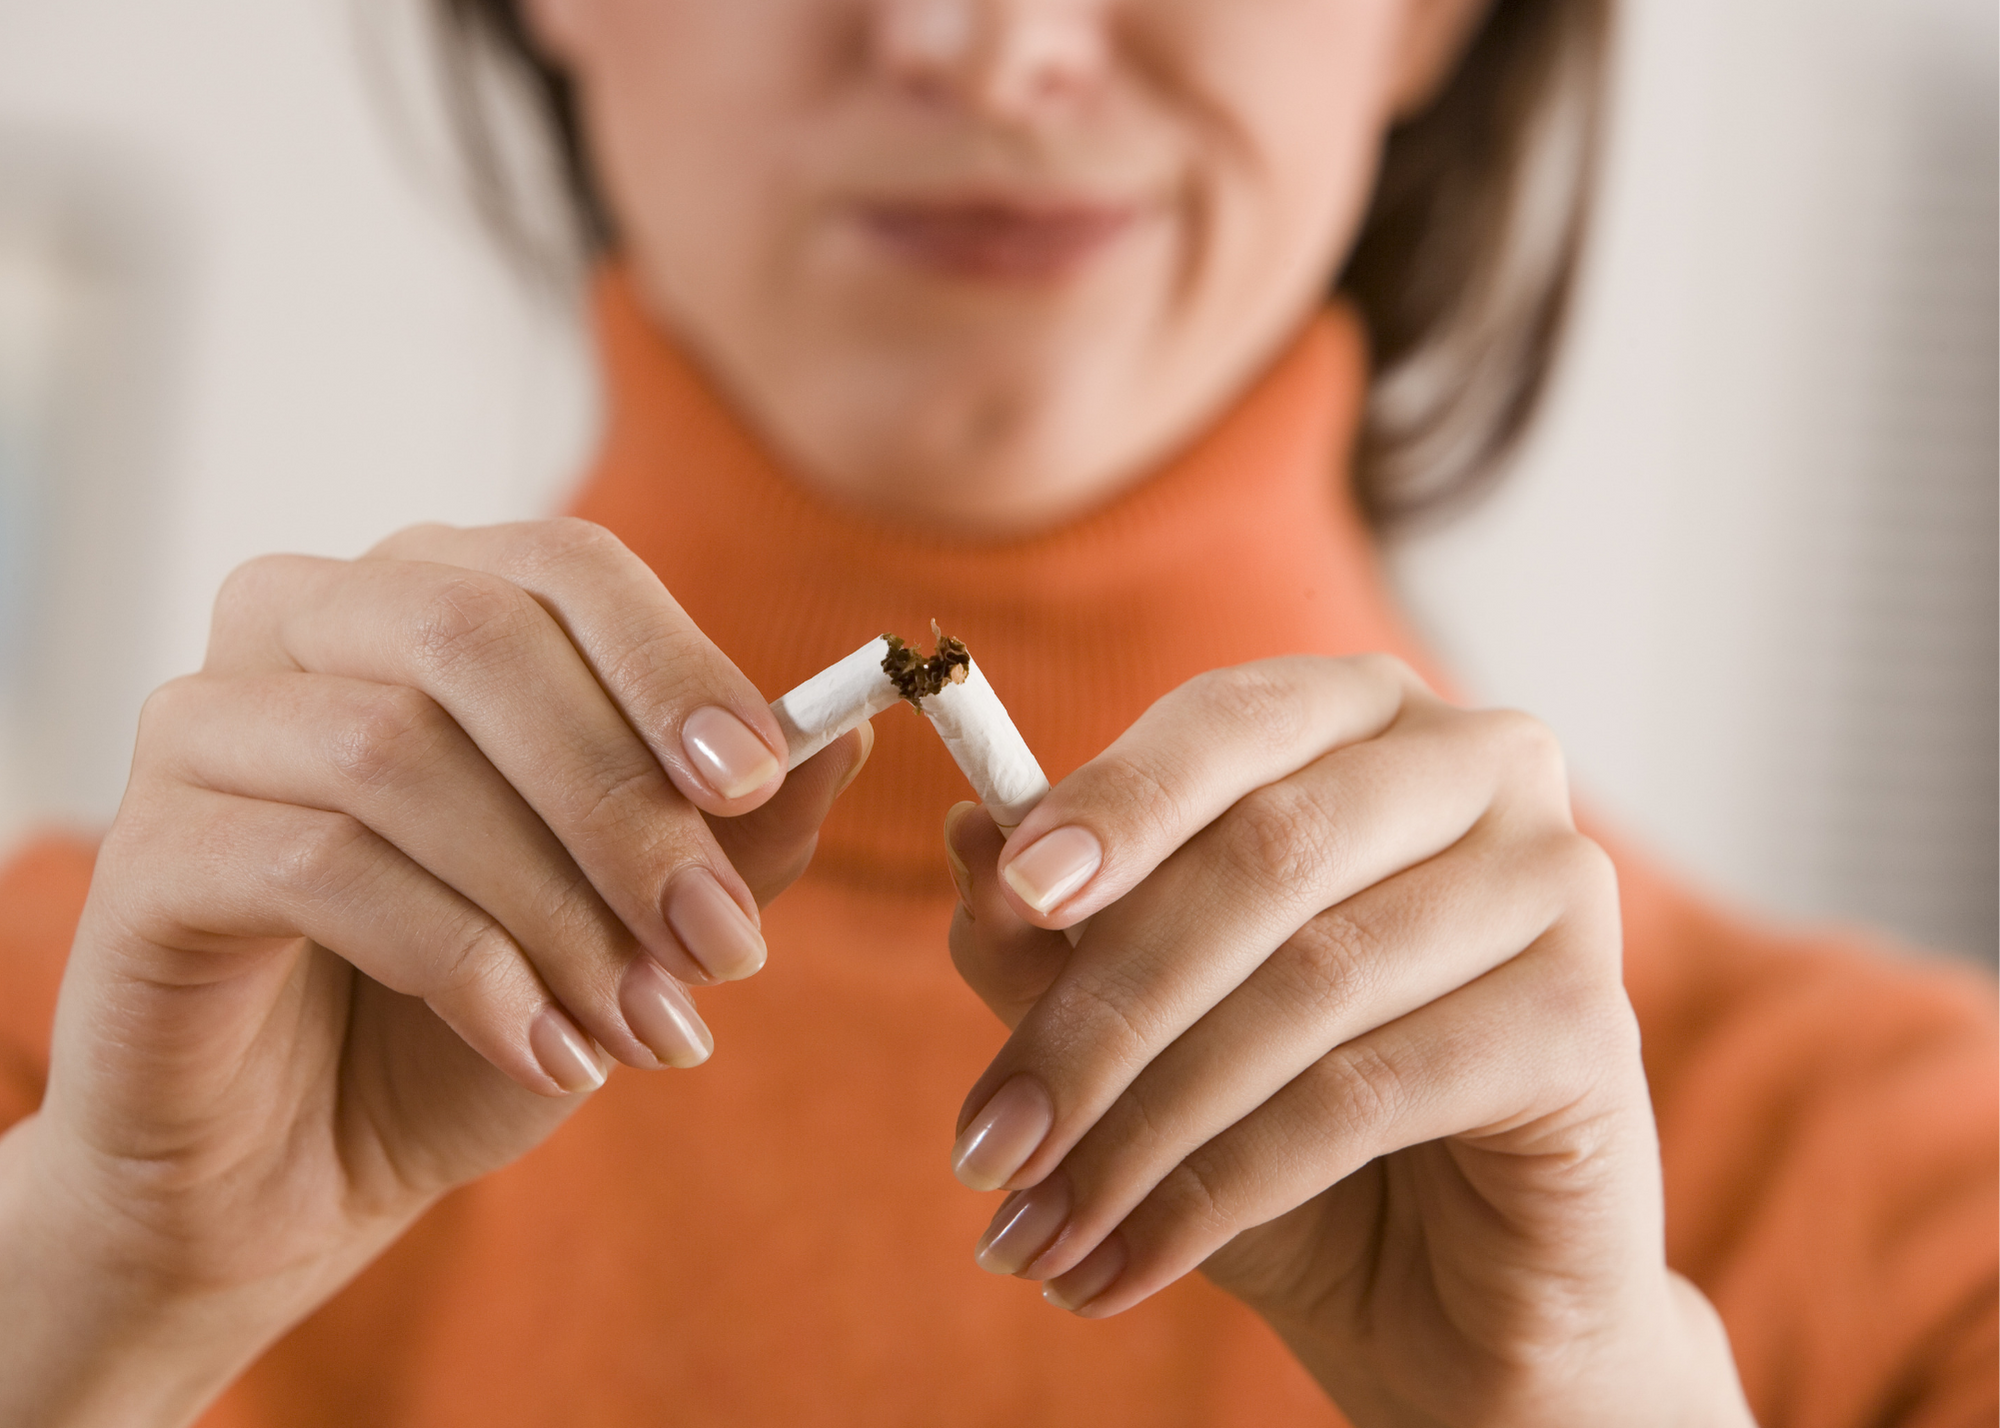 Are Organic Cigarettes Good, Bad, or Safe?